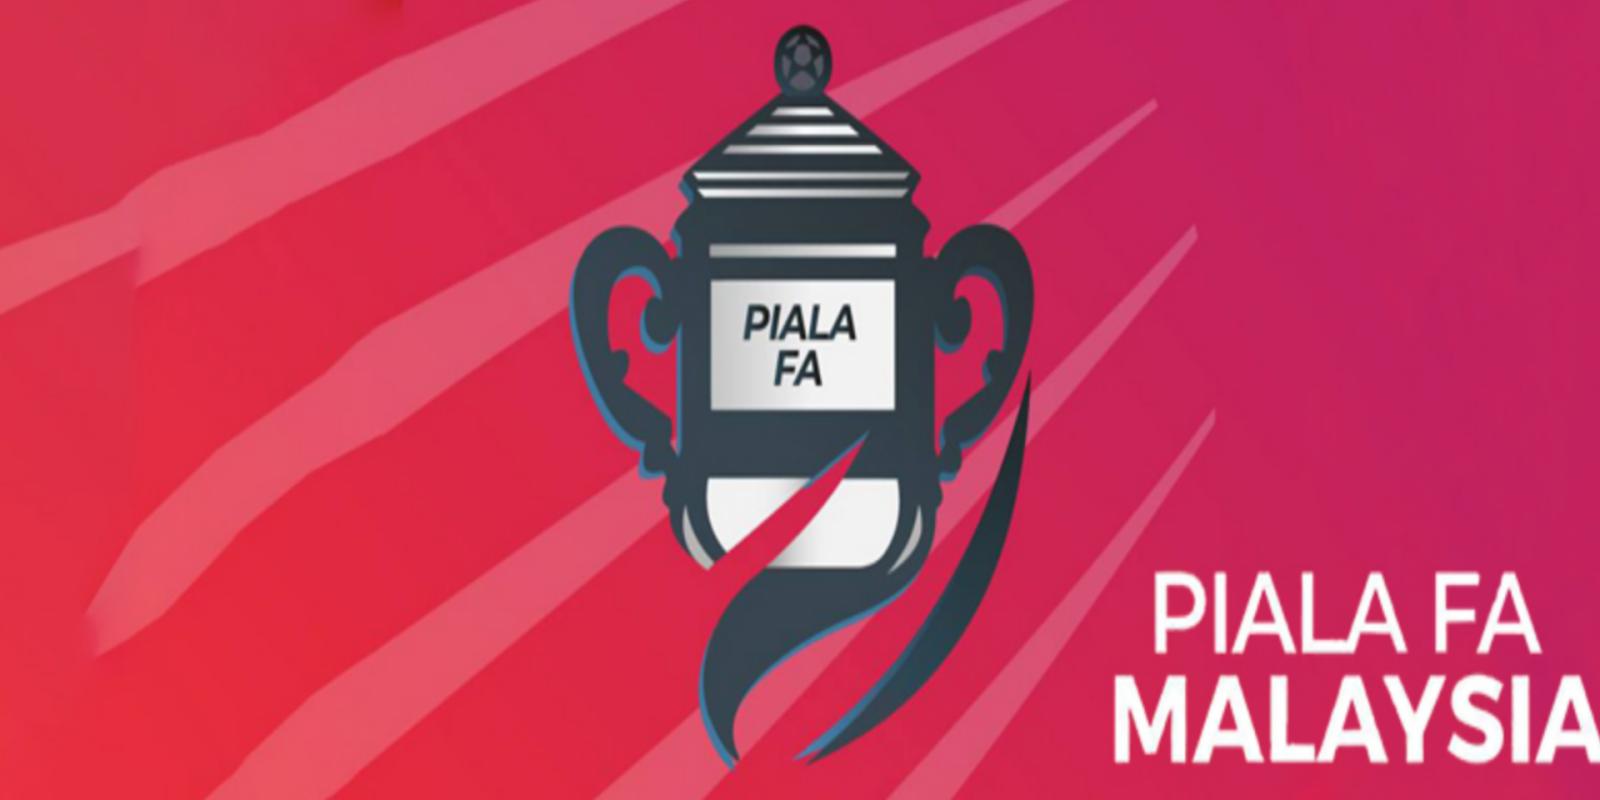 Jadual Piala FA Malaysia 2019 (Keputusan)